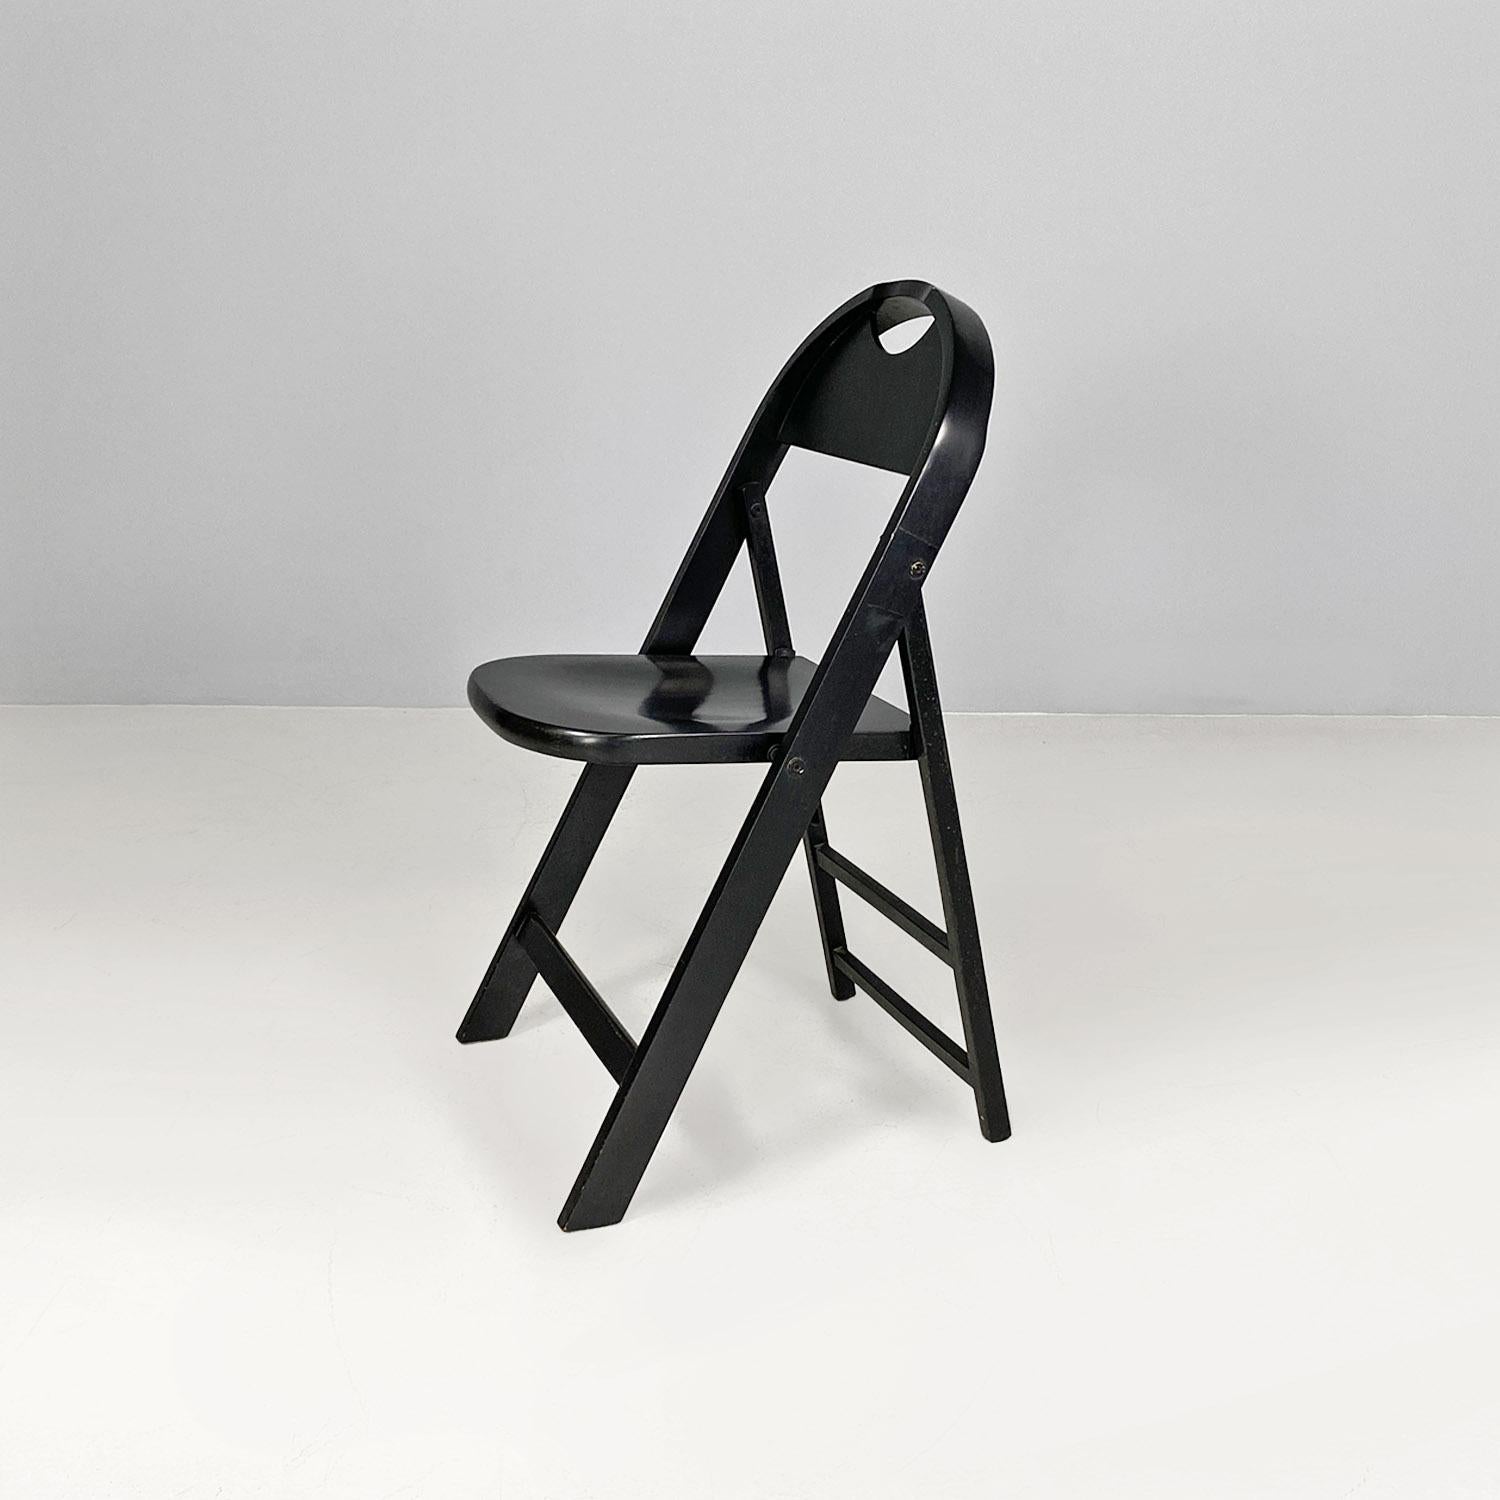 Mid-20th Century Italian folding chair, black wood, Achille and Pier Giacomo Castiglioni 1960s For Sale